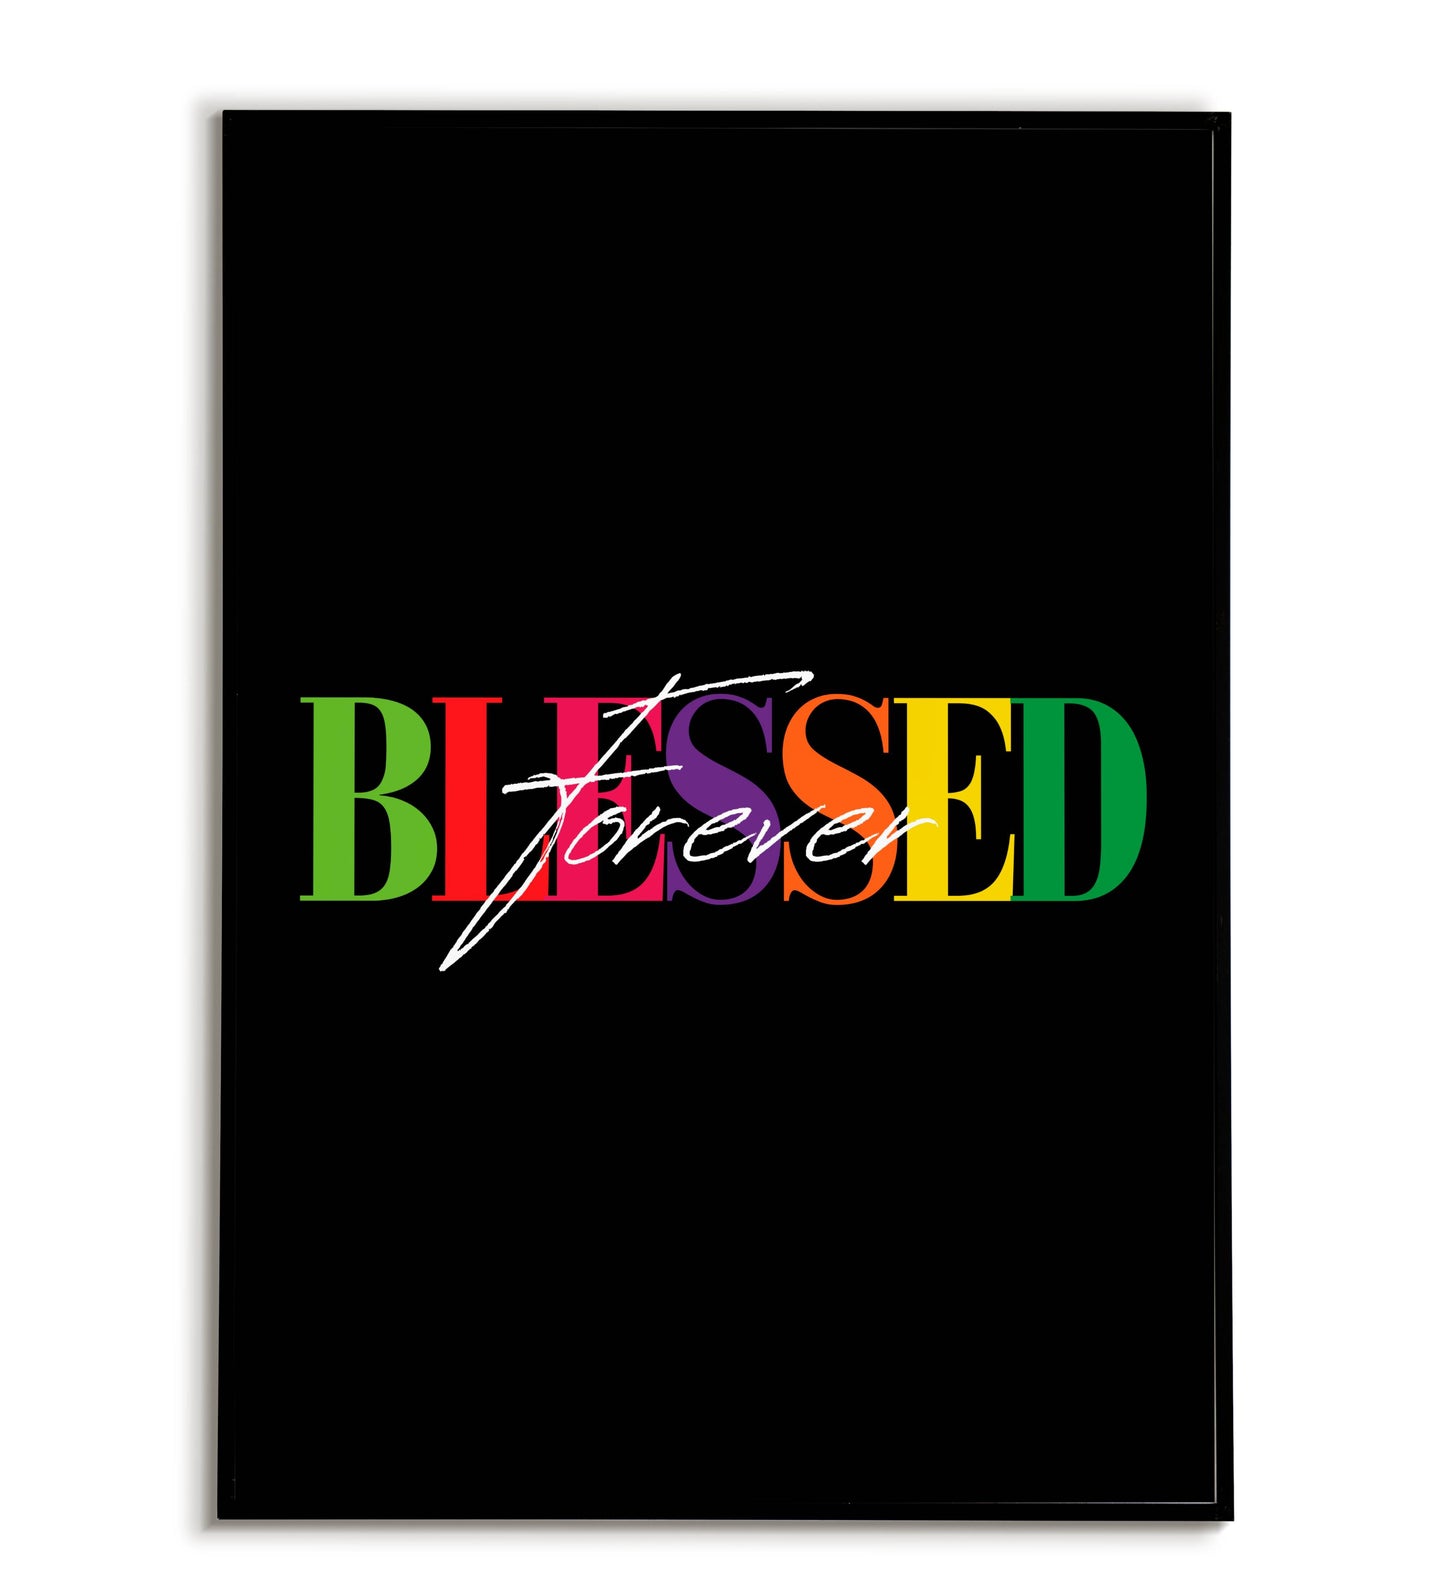 "Blessed forever" printable inspirational poster.